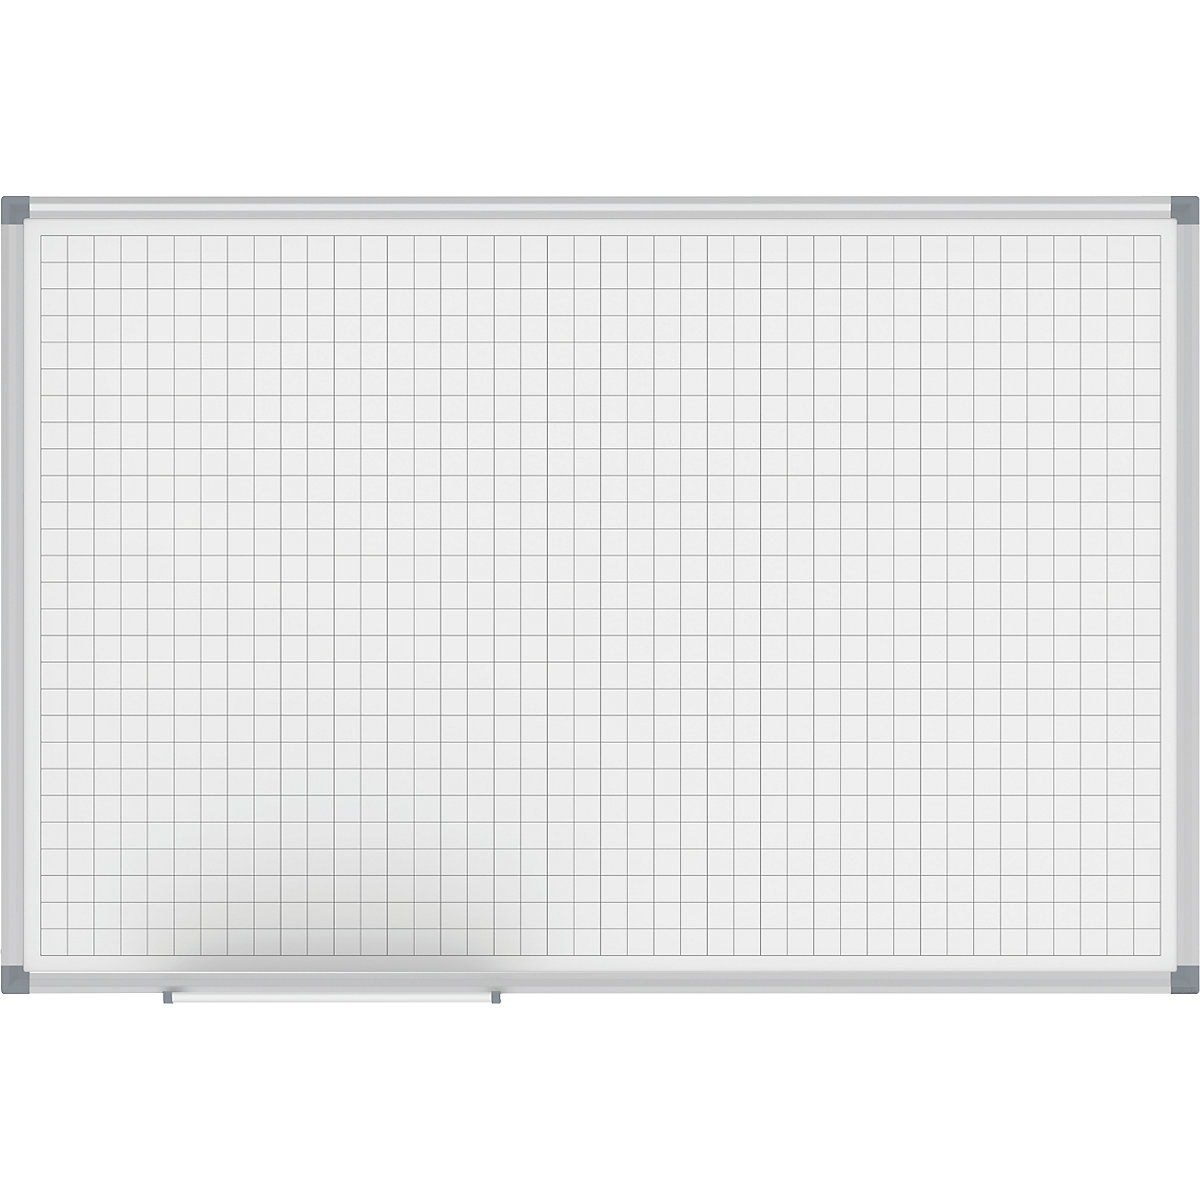 MAULstandard grid board, white - MAUL